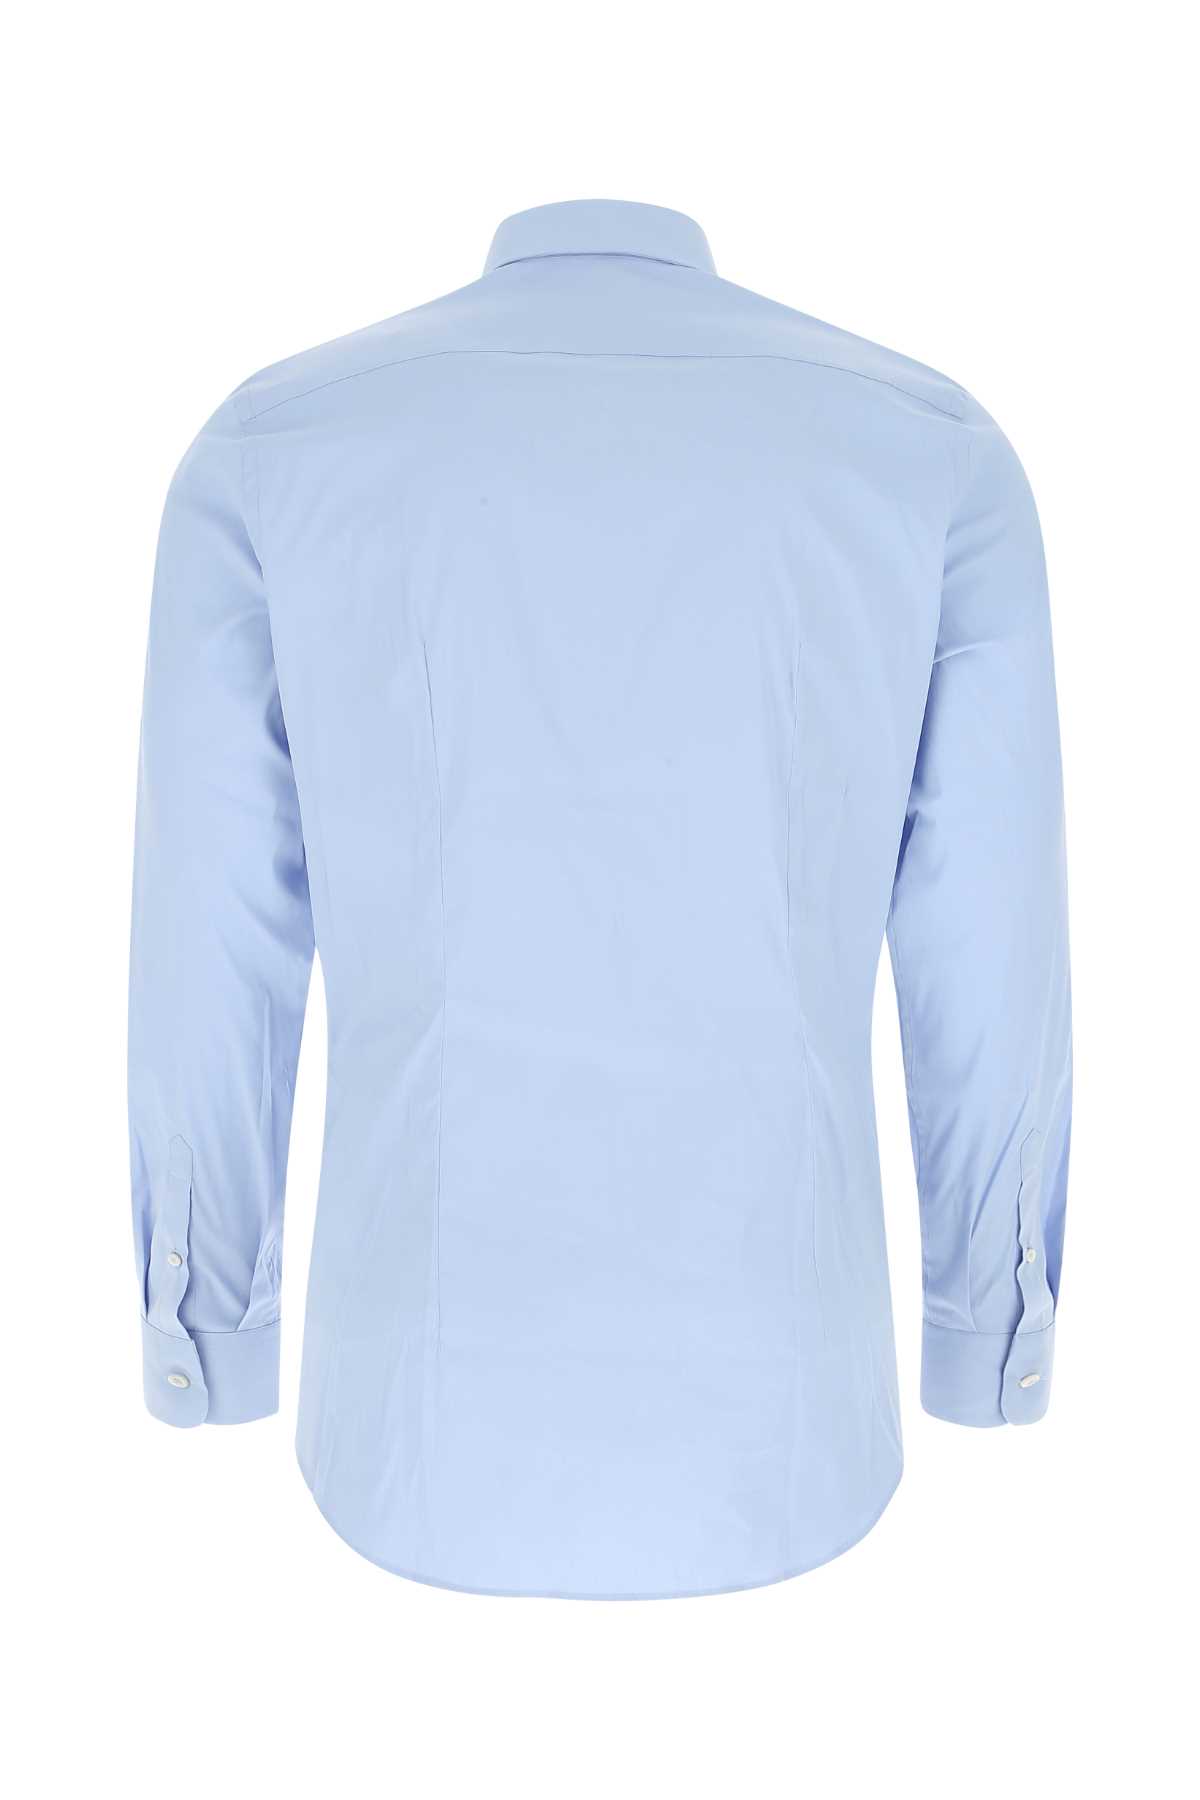 Prada Pastel Light Blue Stretch Poplin Shirt In F0012